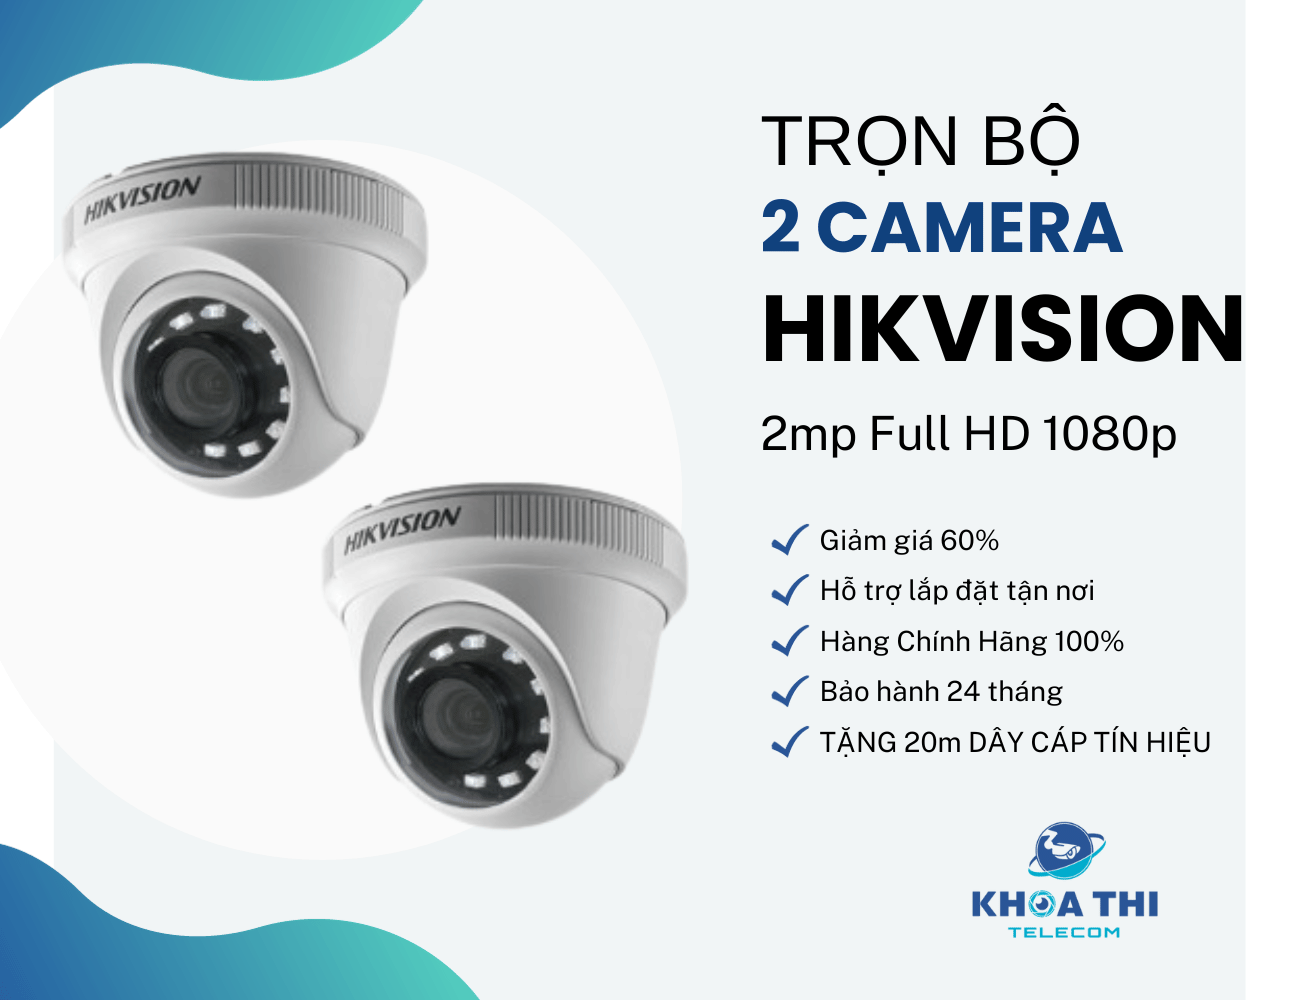 Trọn Bộ 2 Camera Hikvision 2mp Full HD